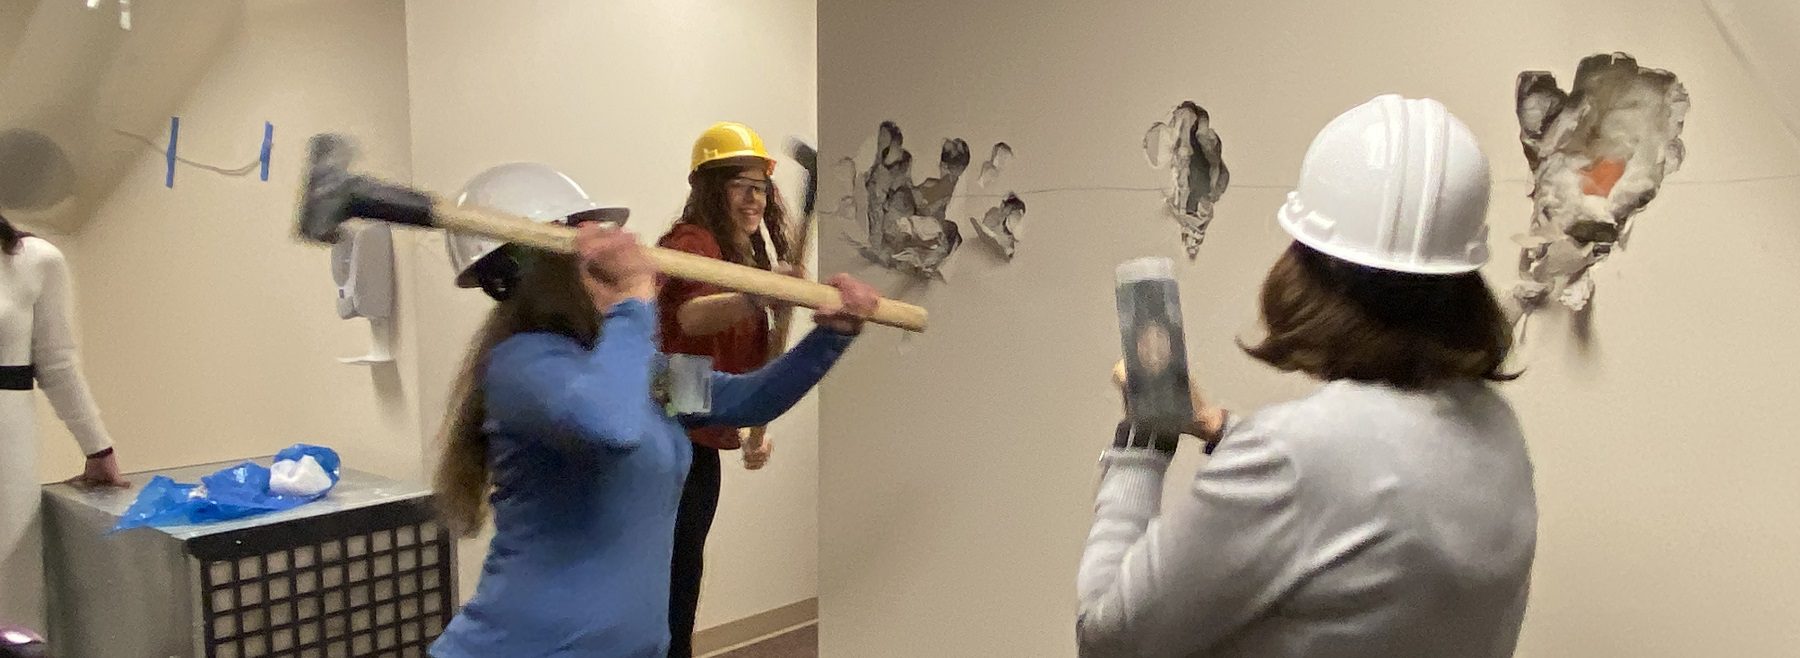 Professional women wearing hard hats swing sledgehammers at a wall.